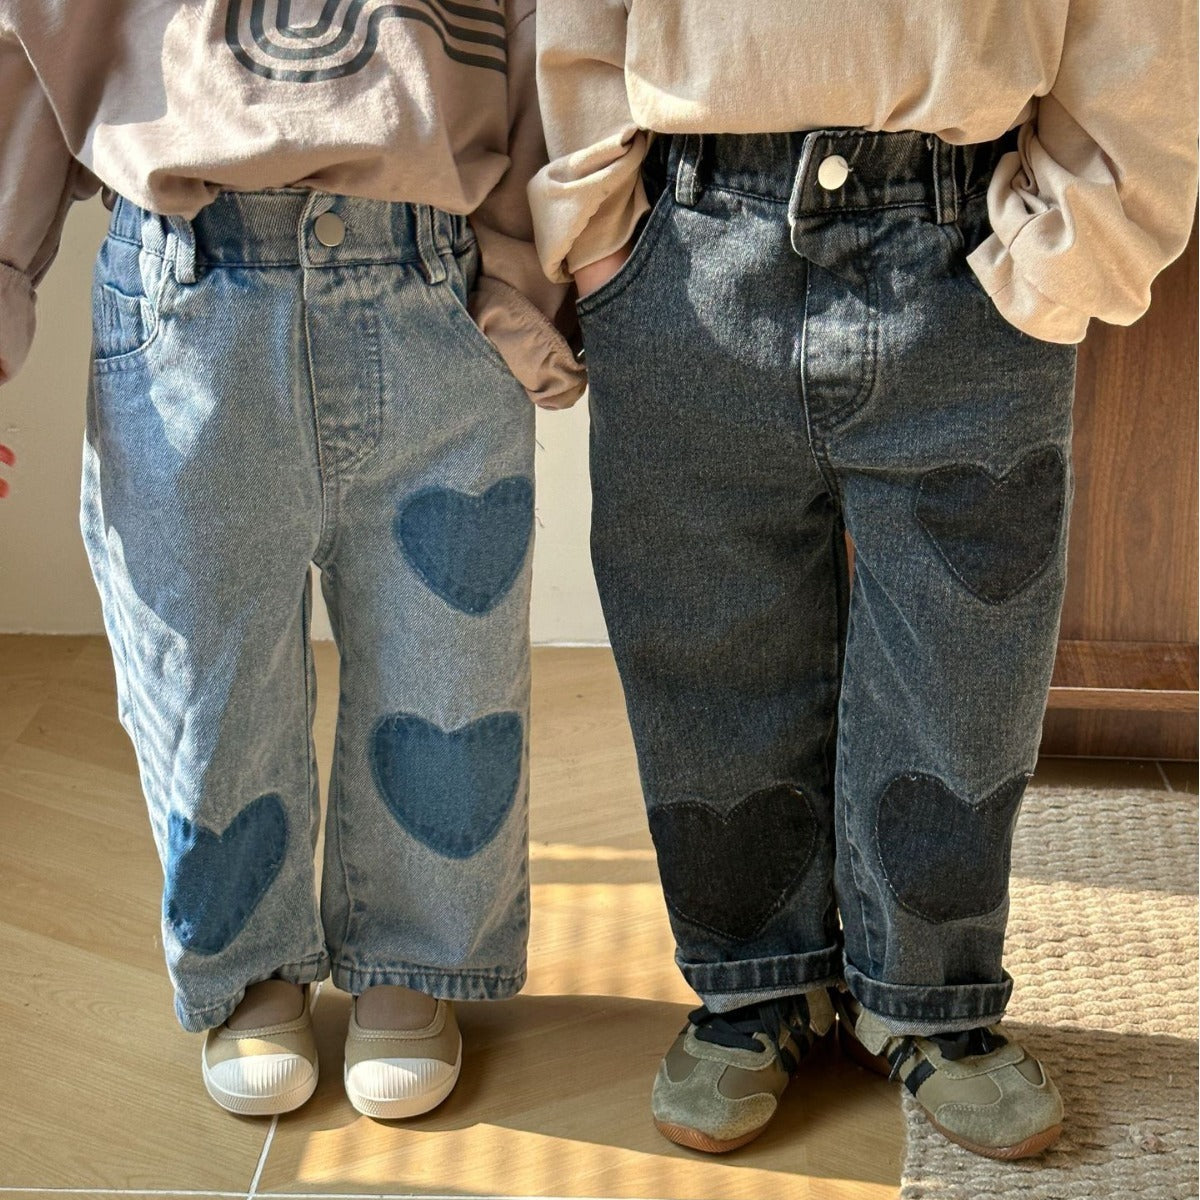 Children love heart jeans